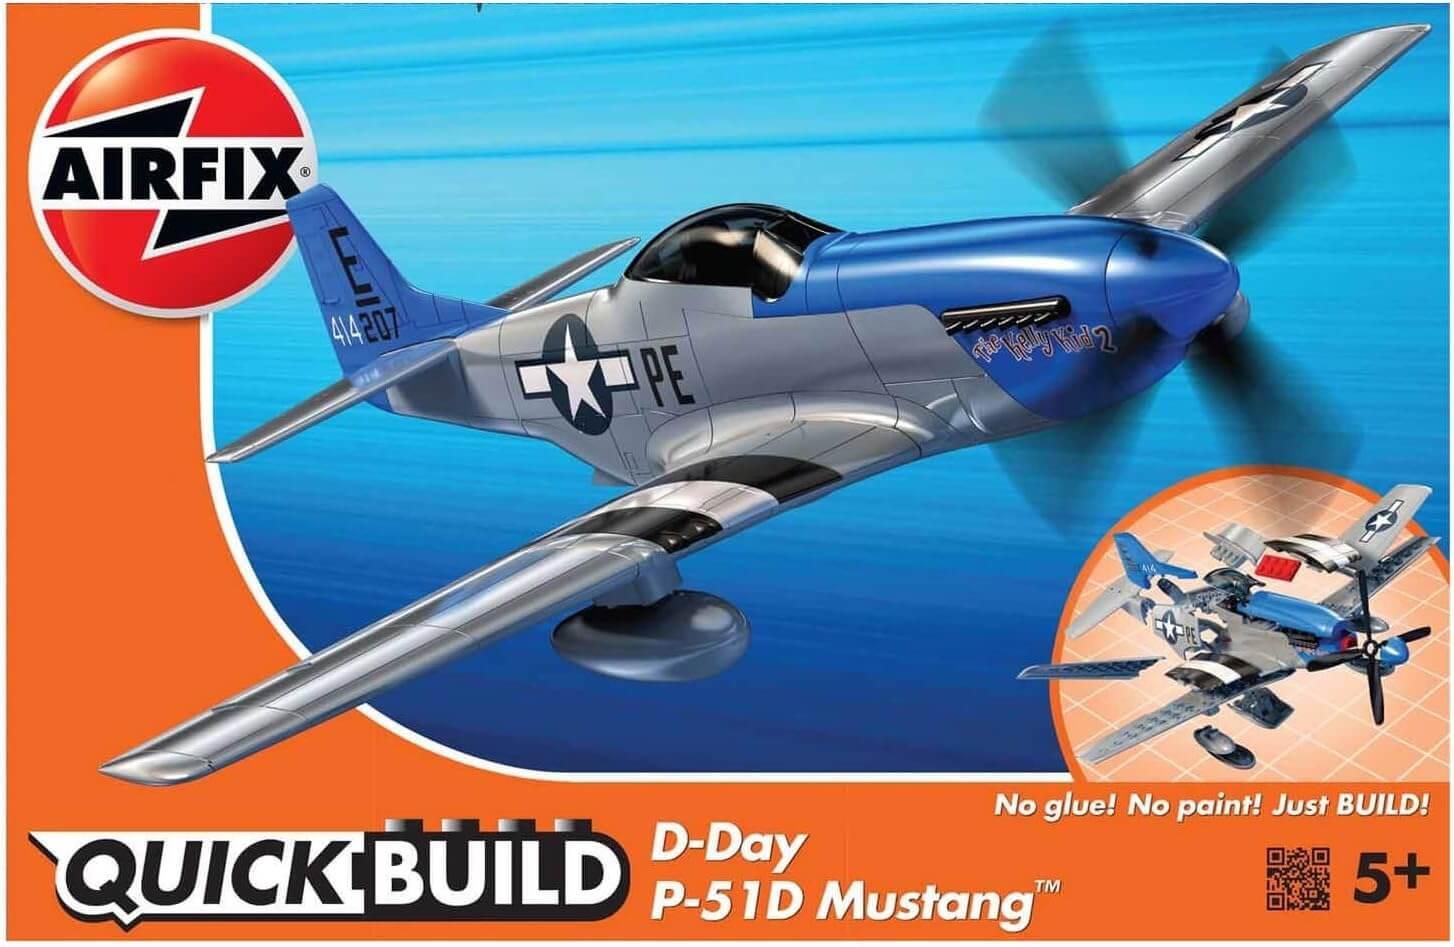 Airfix - QUICKBUILD D-Day P-51D Mustang